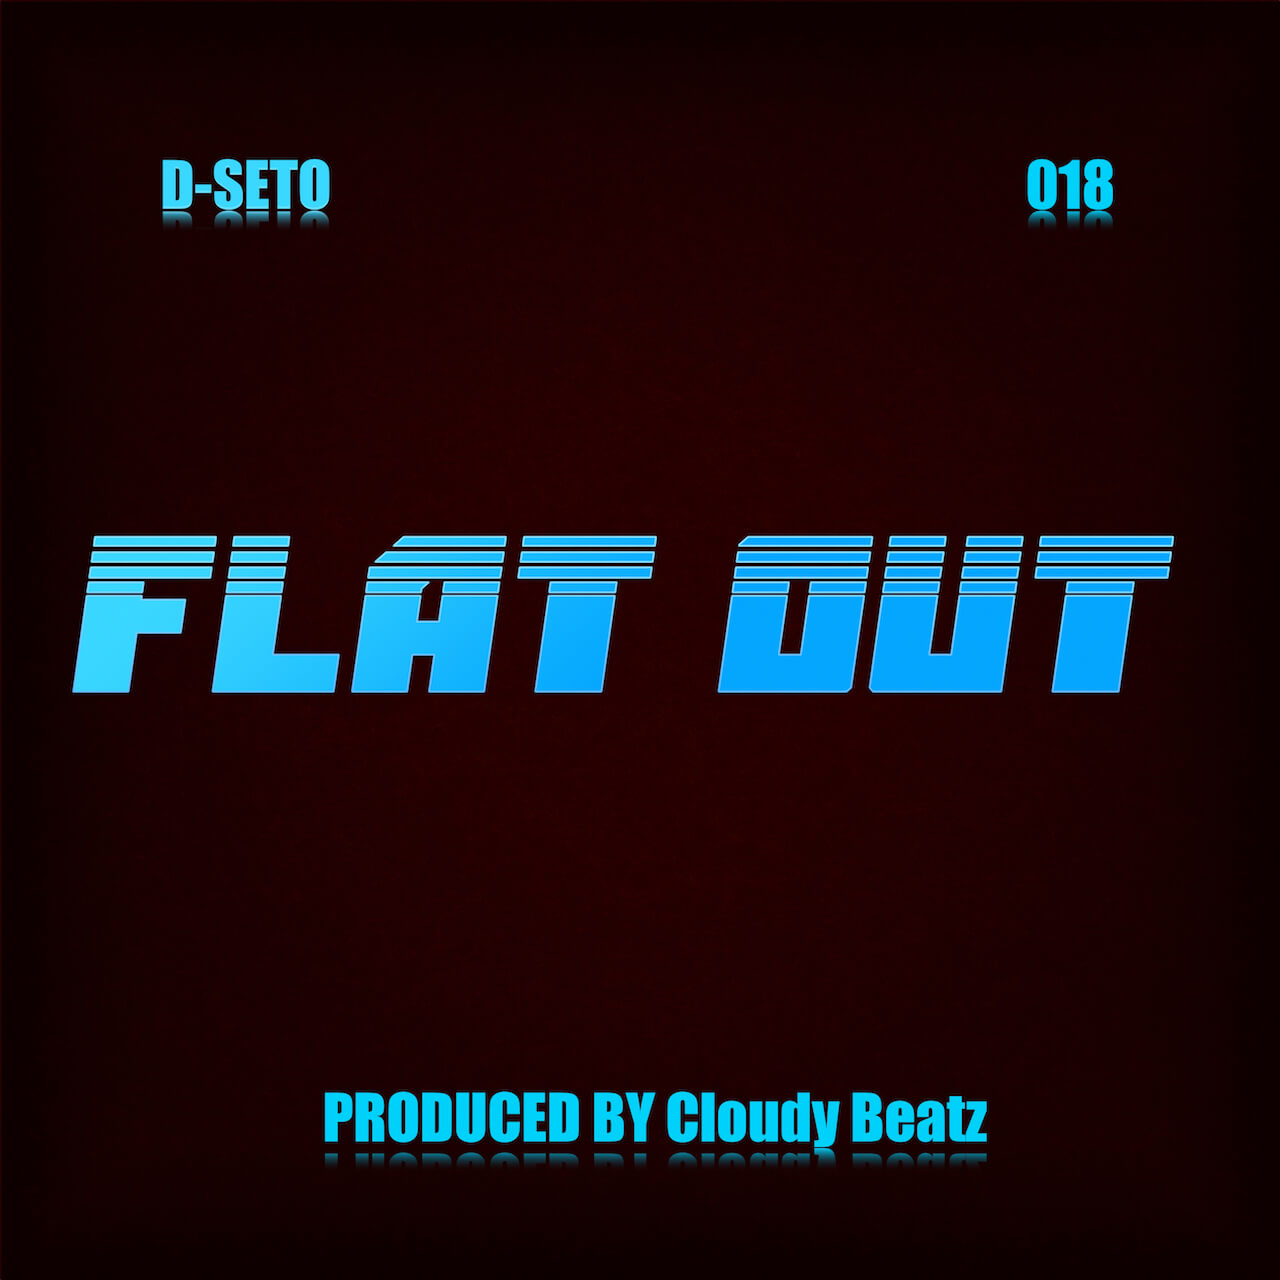 D-SETOと018がコラボシングル「FLAT OUT」をリリース｜プロデュースはCloudy Beatz music211207-flatout-018